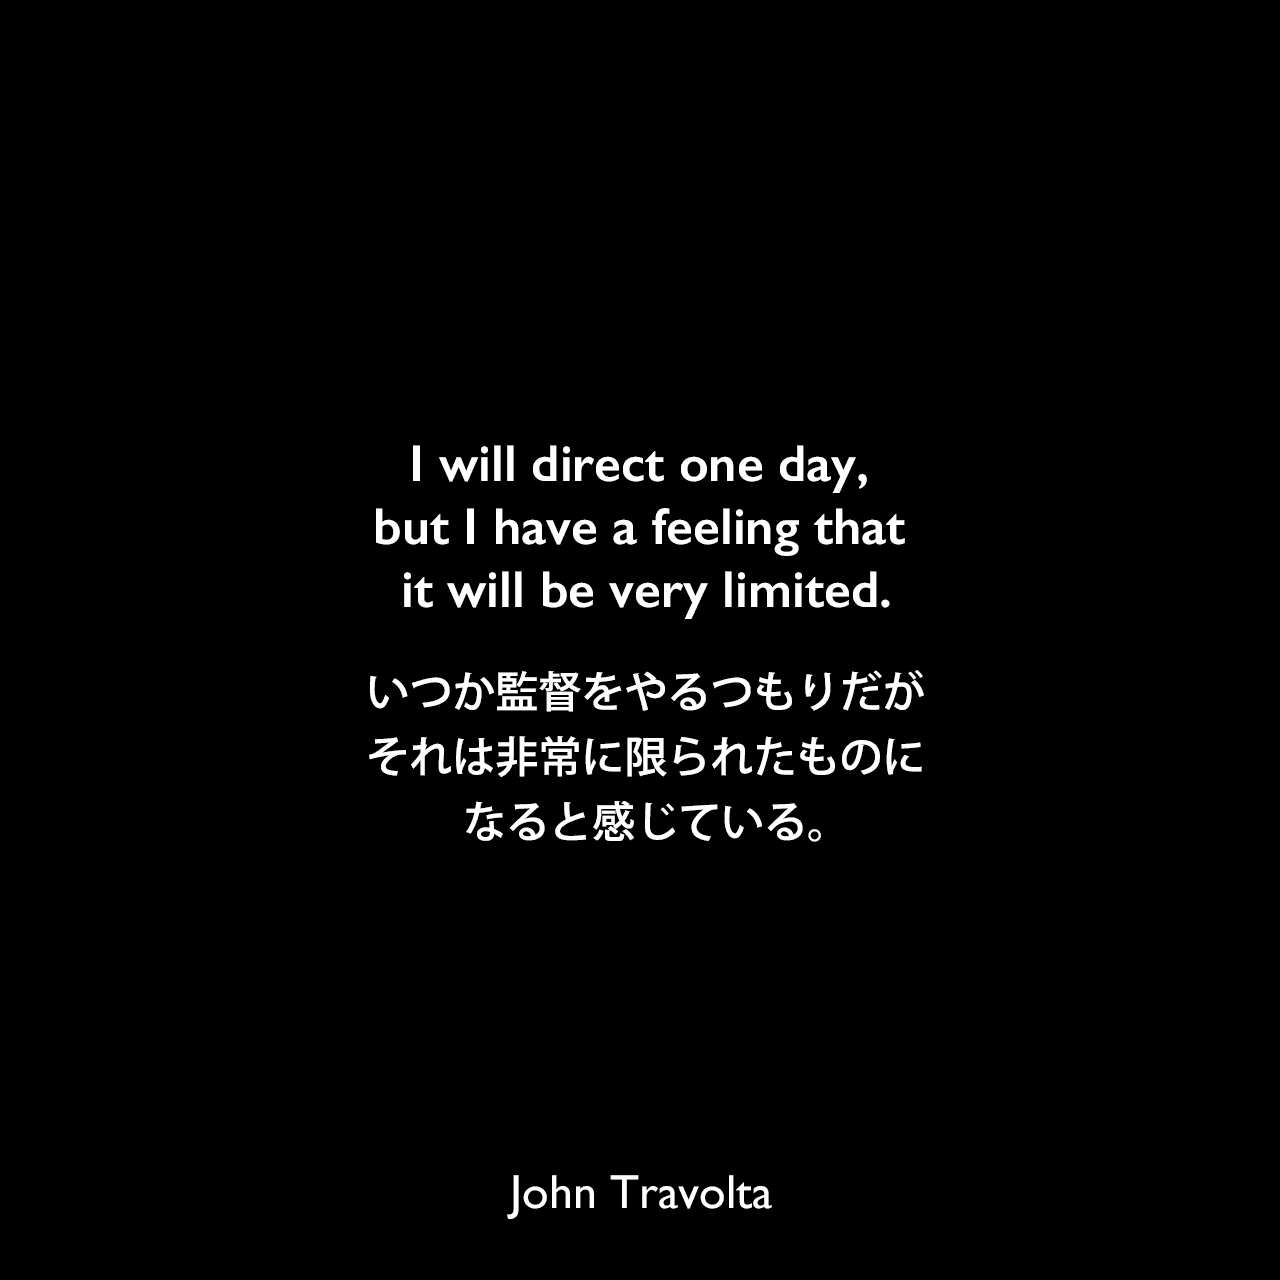 I will direct one day, but I have a feeling that it will be very limited.いつか監督をやるつもりだが、それは非常に限られたものになると感じている。John Travolta